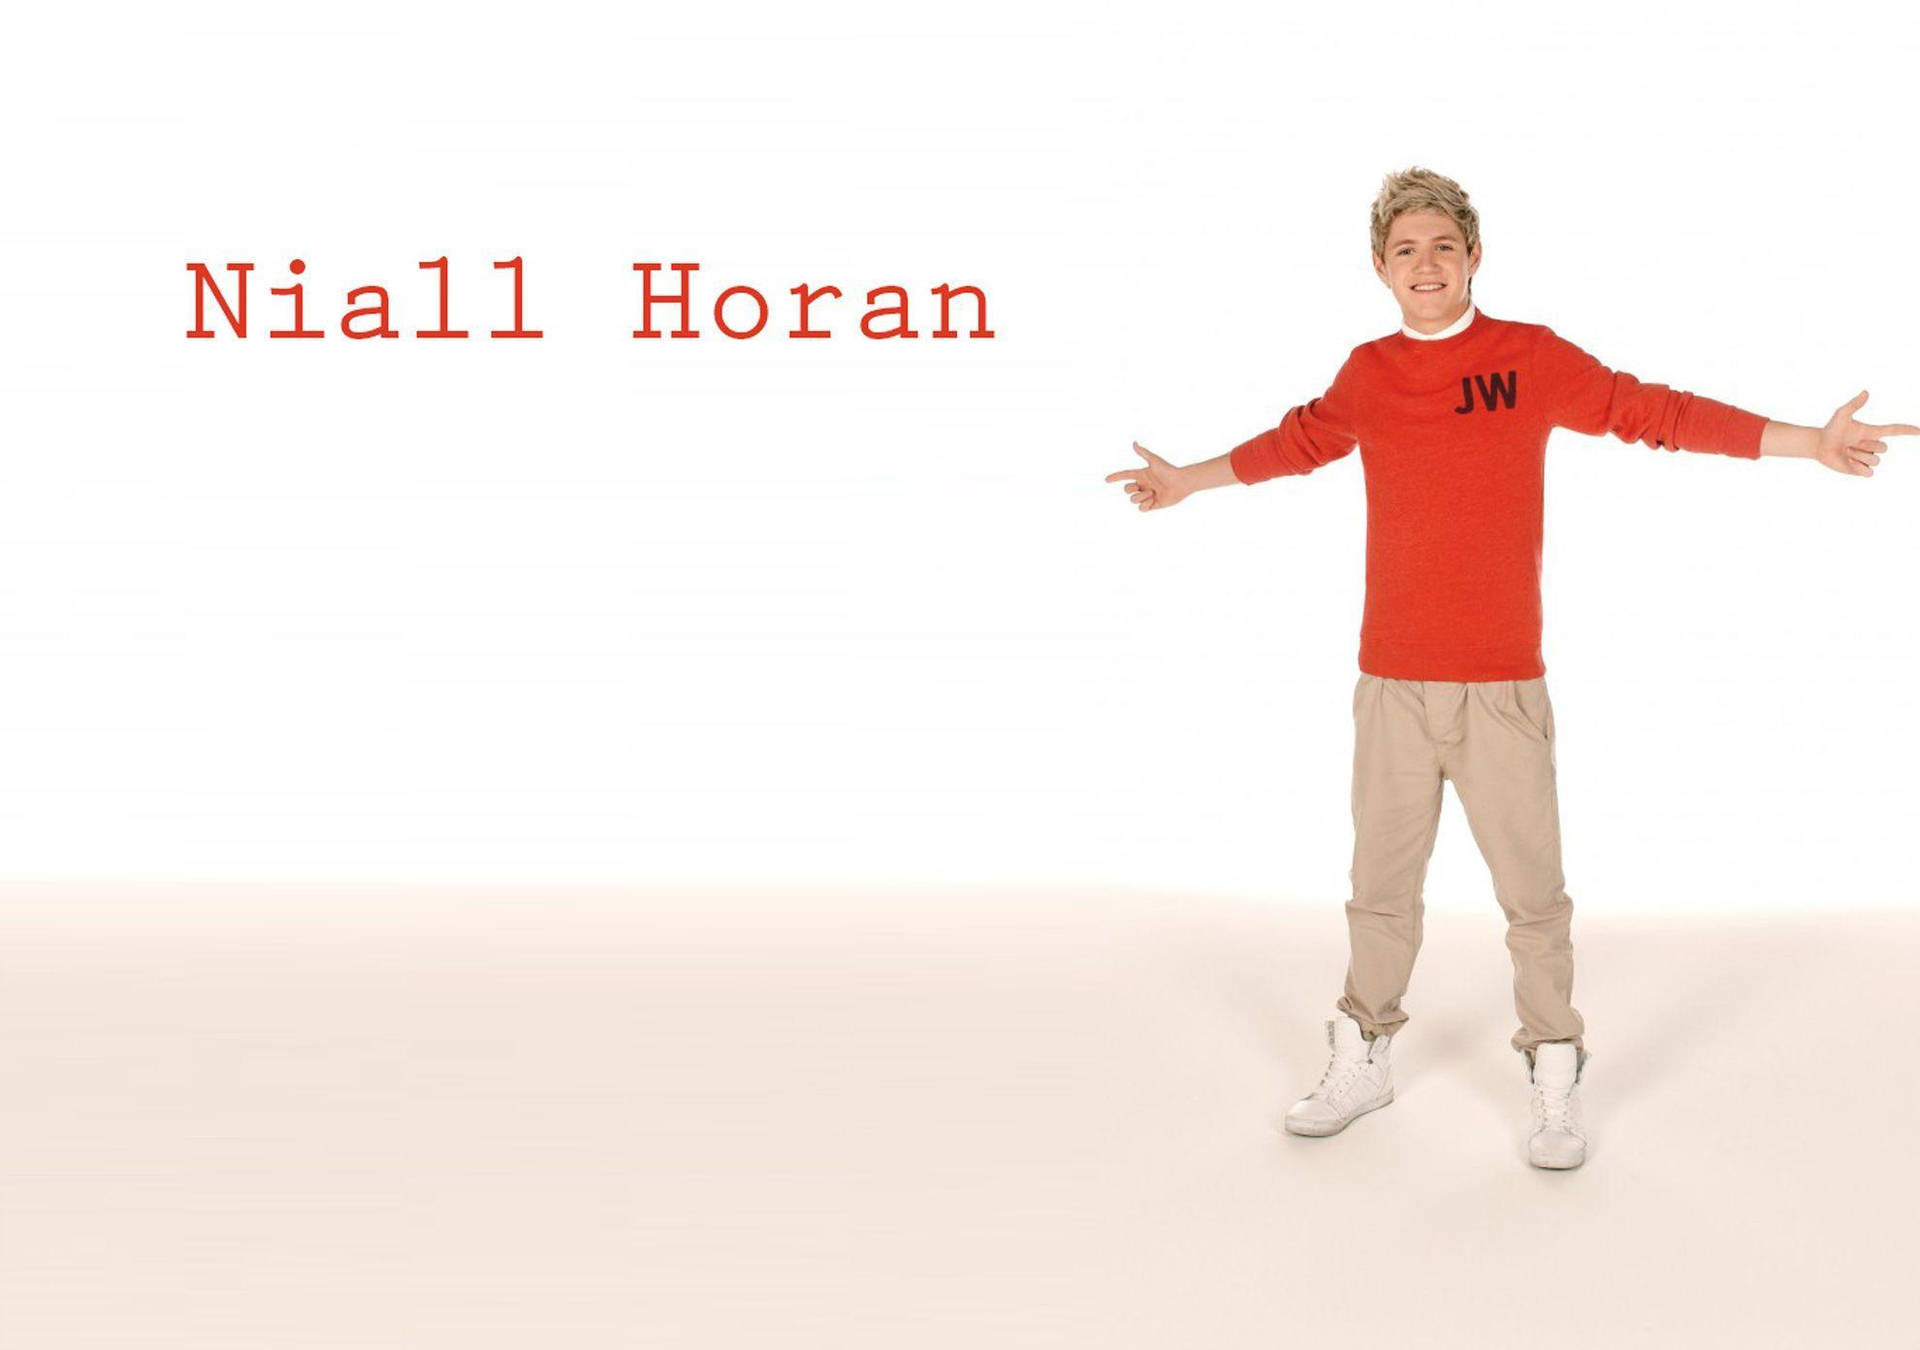 Niall Horan Jw Shirt Background